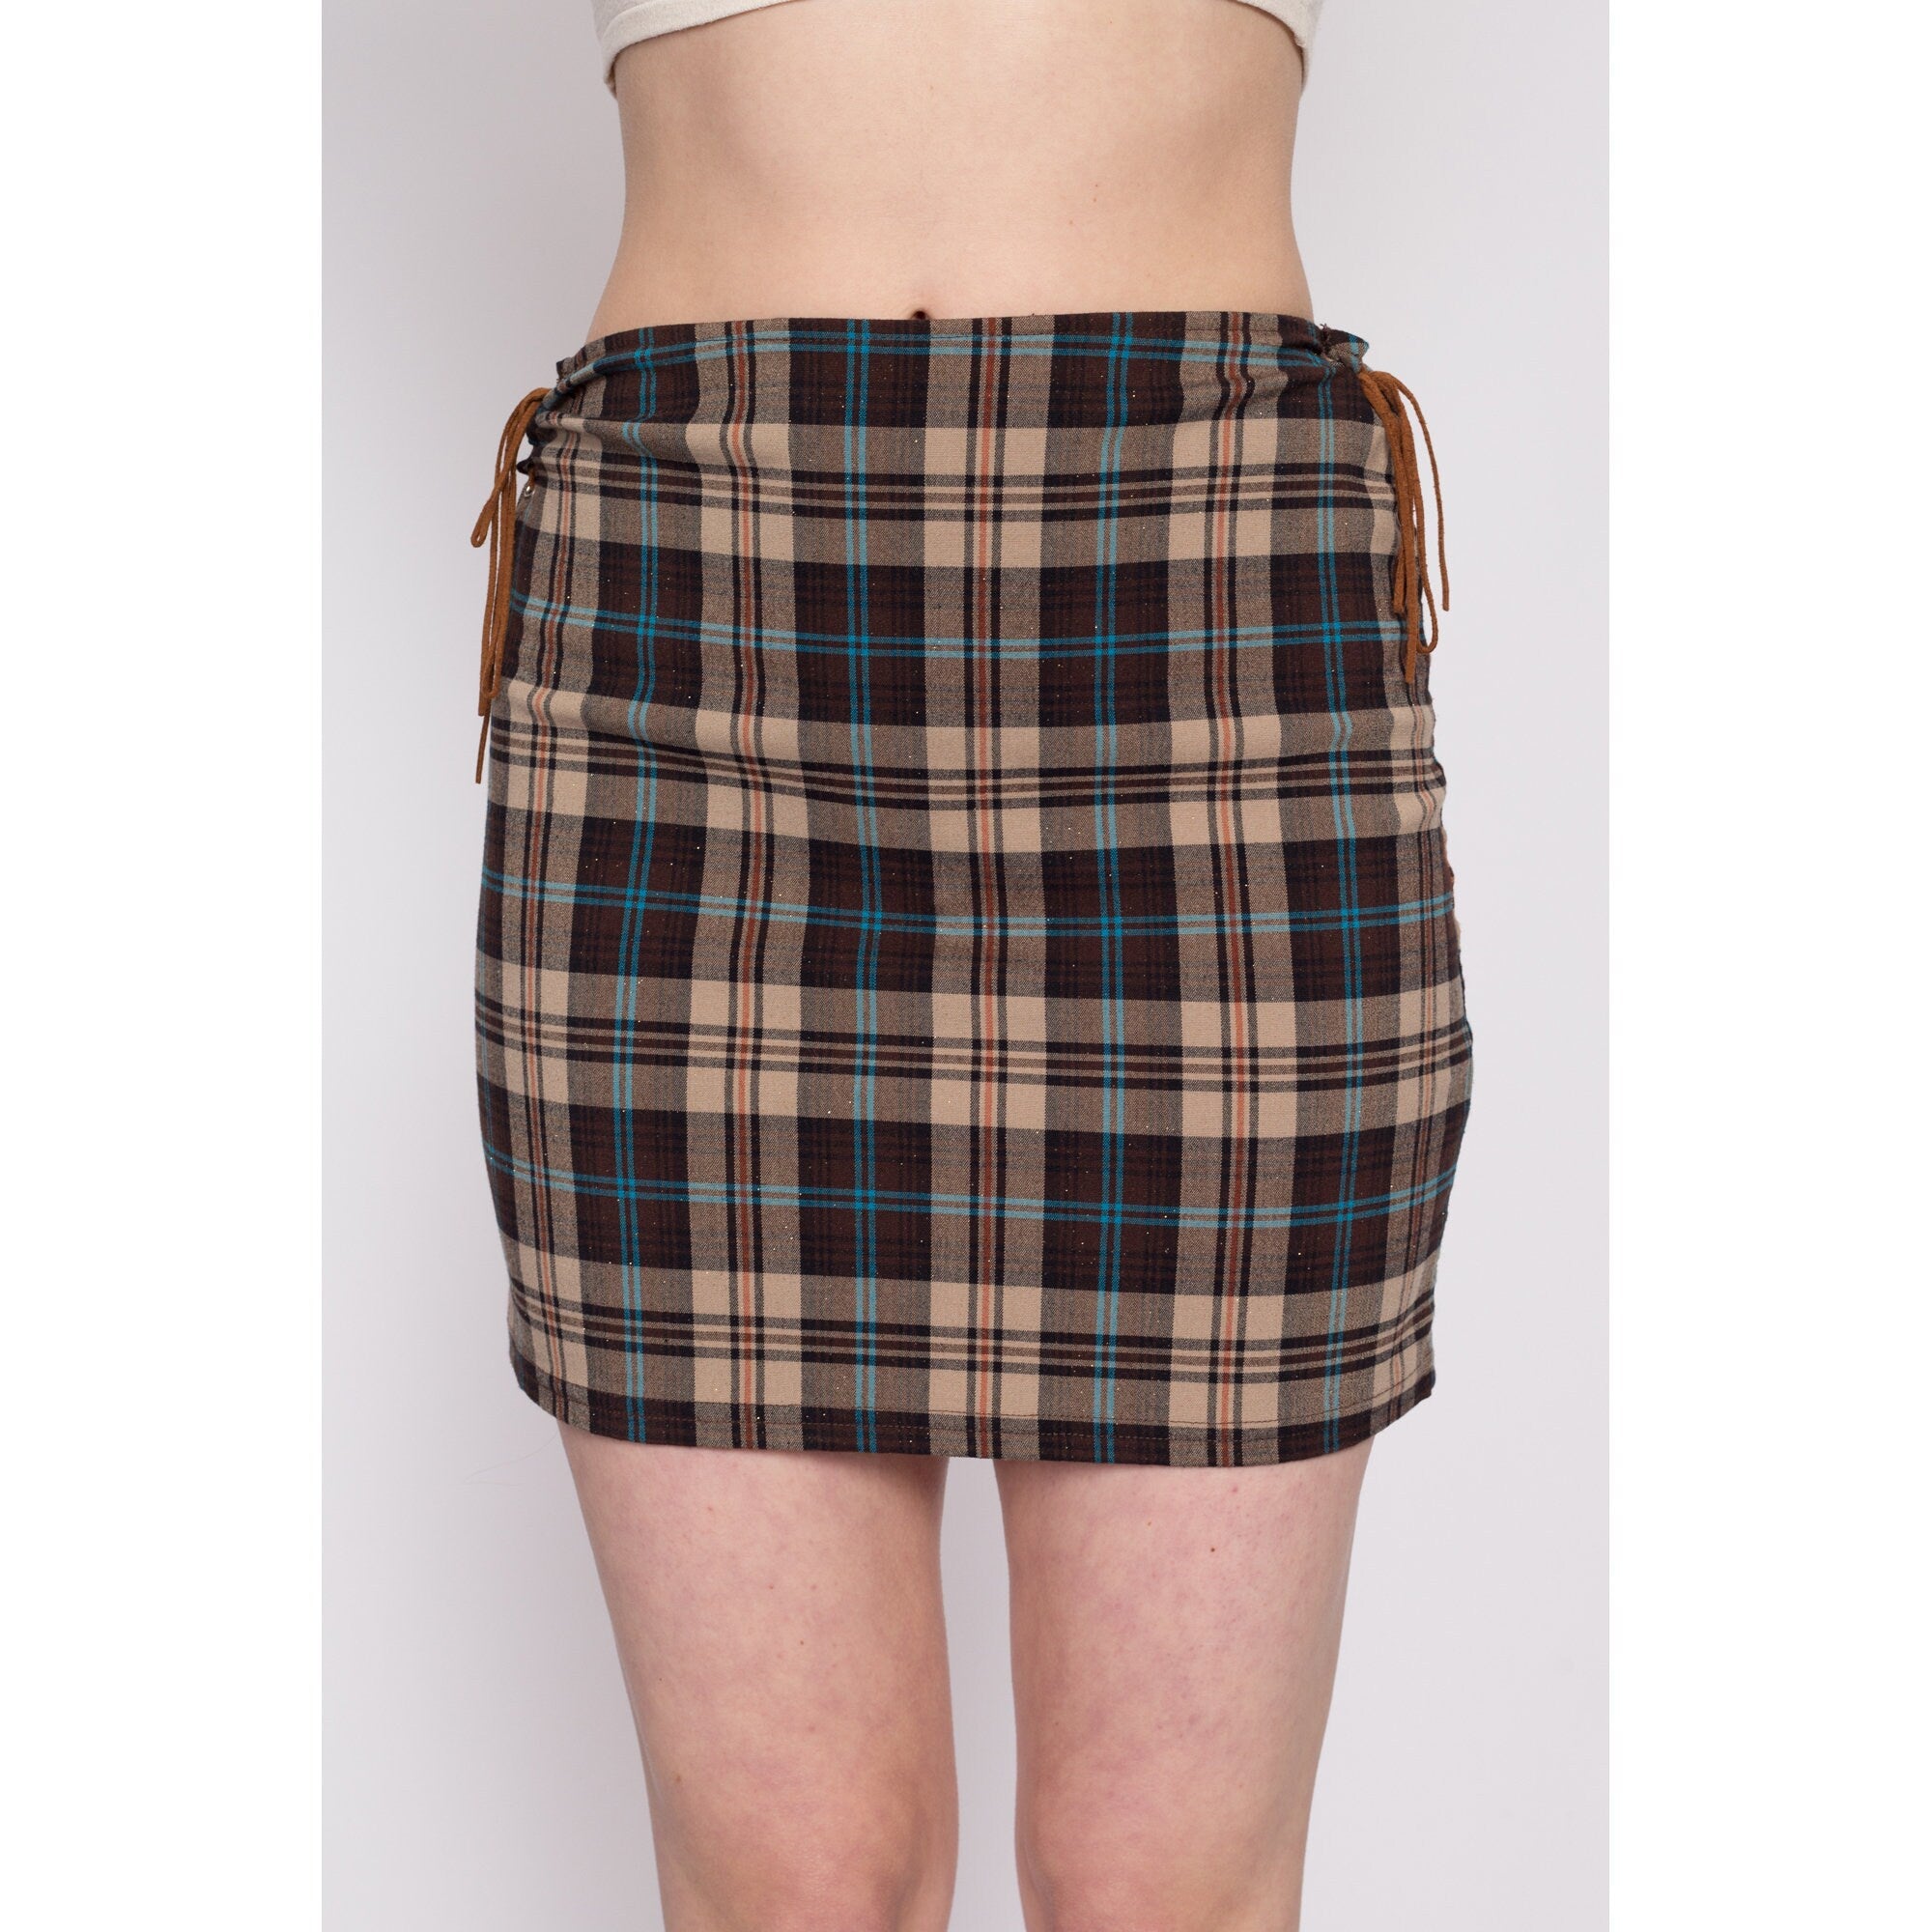 Plus Size Plaid Midi Skirt Plus Size Pencil Skirt High Waist Skirts